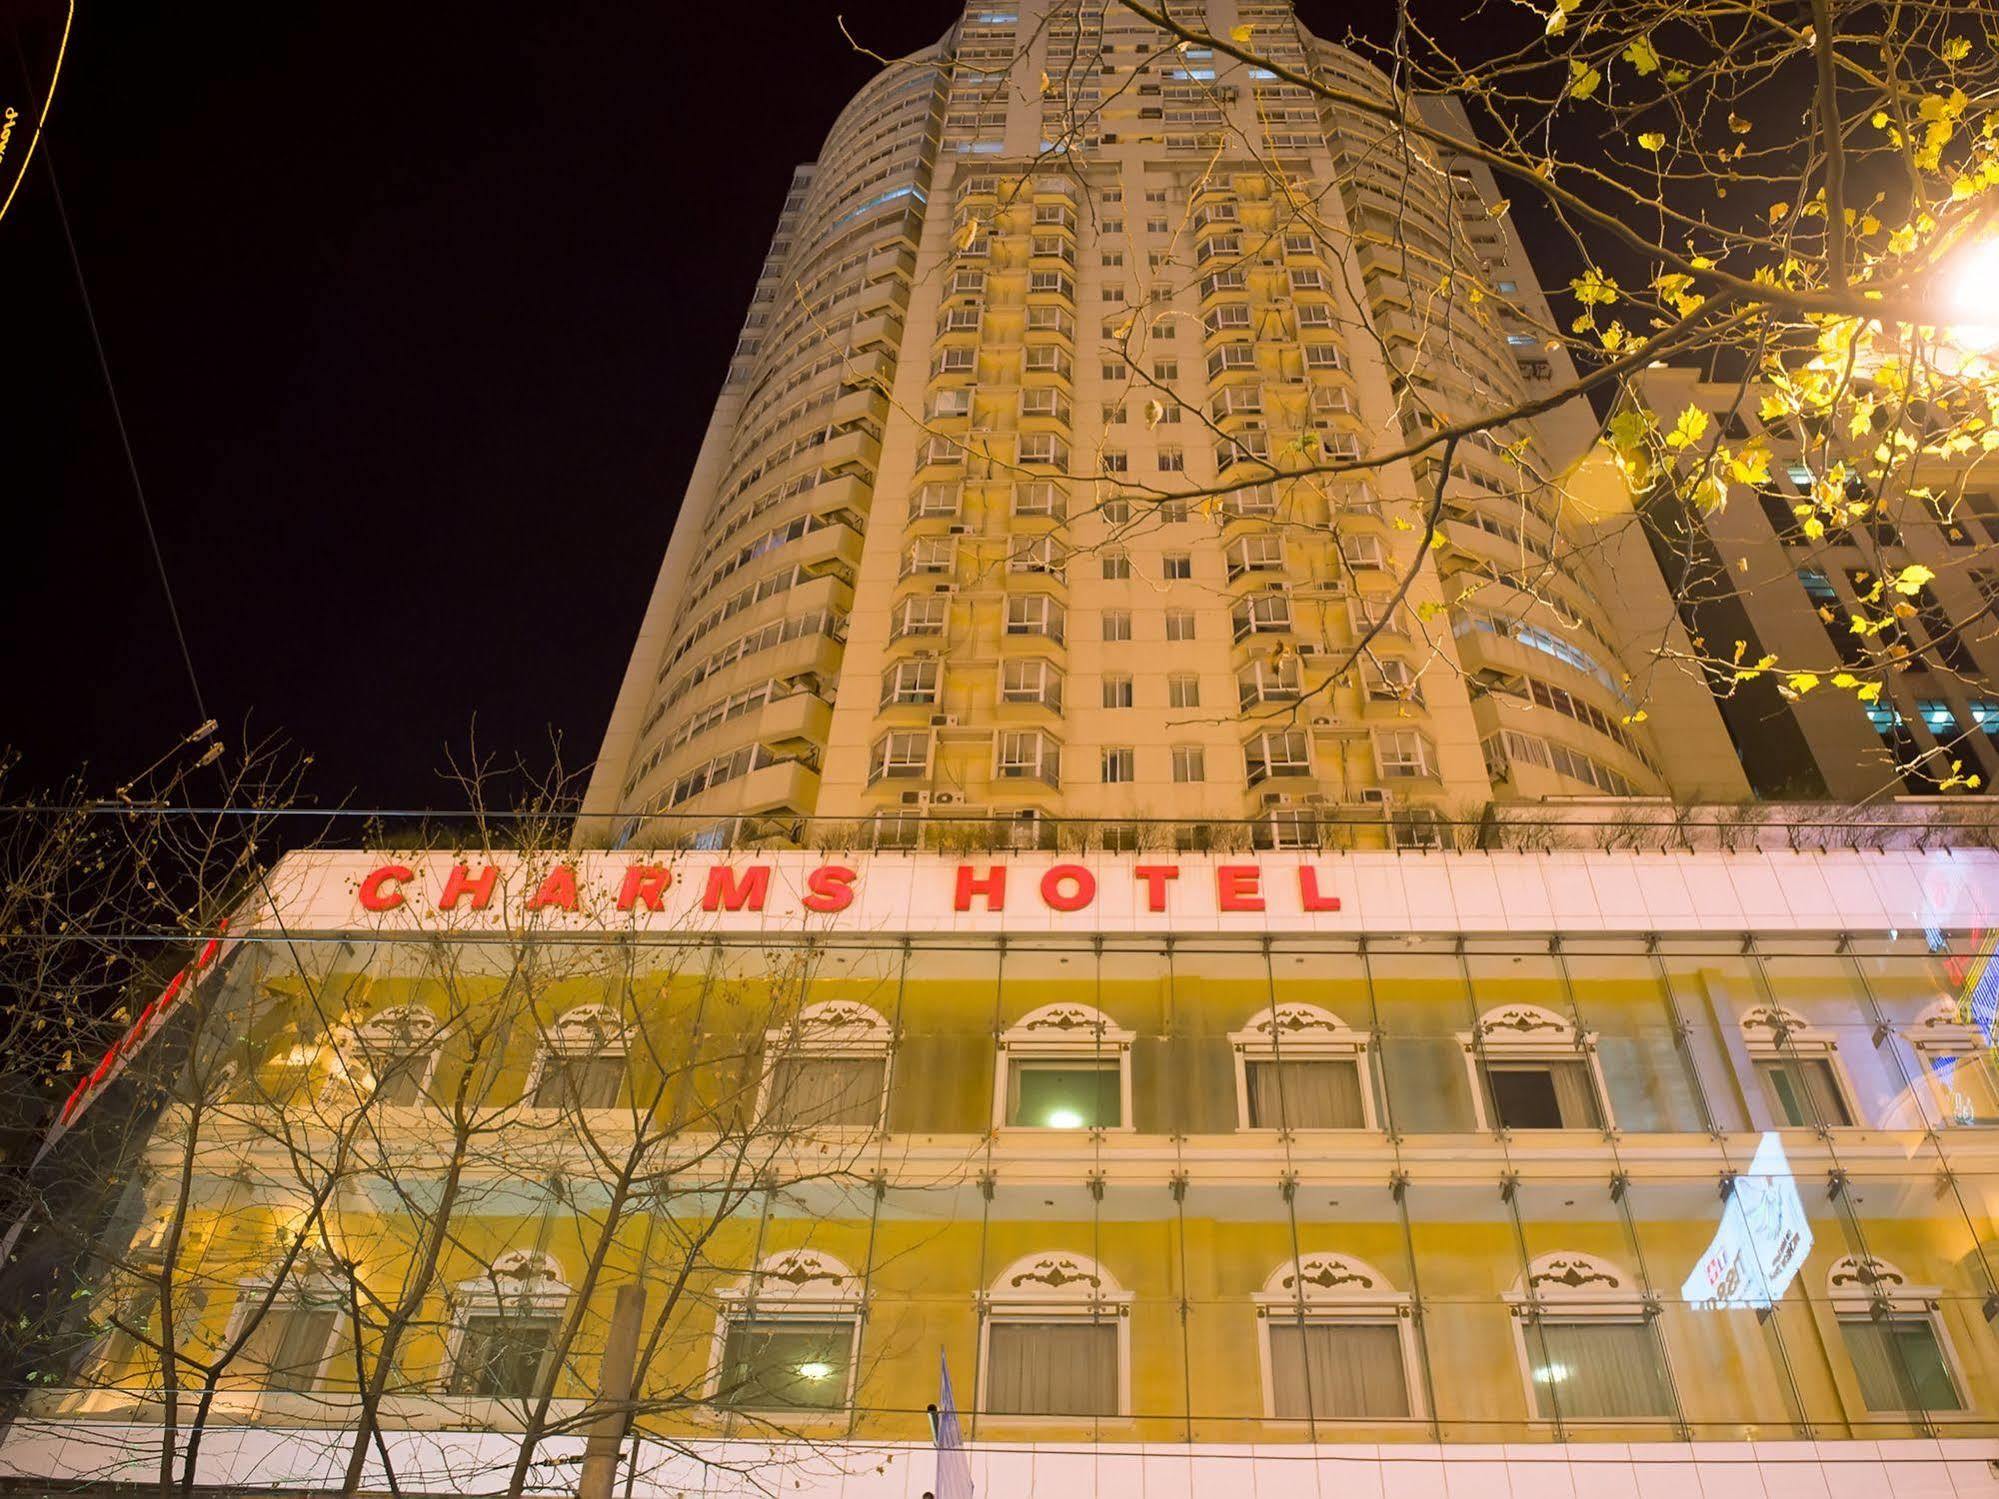 Shanghai Charms Hotel Exterior photo